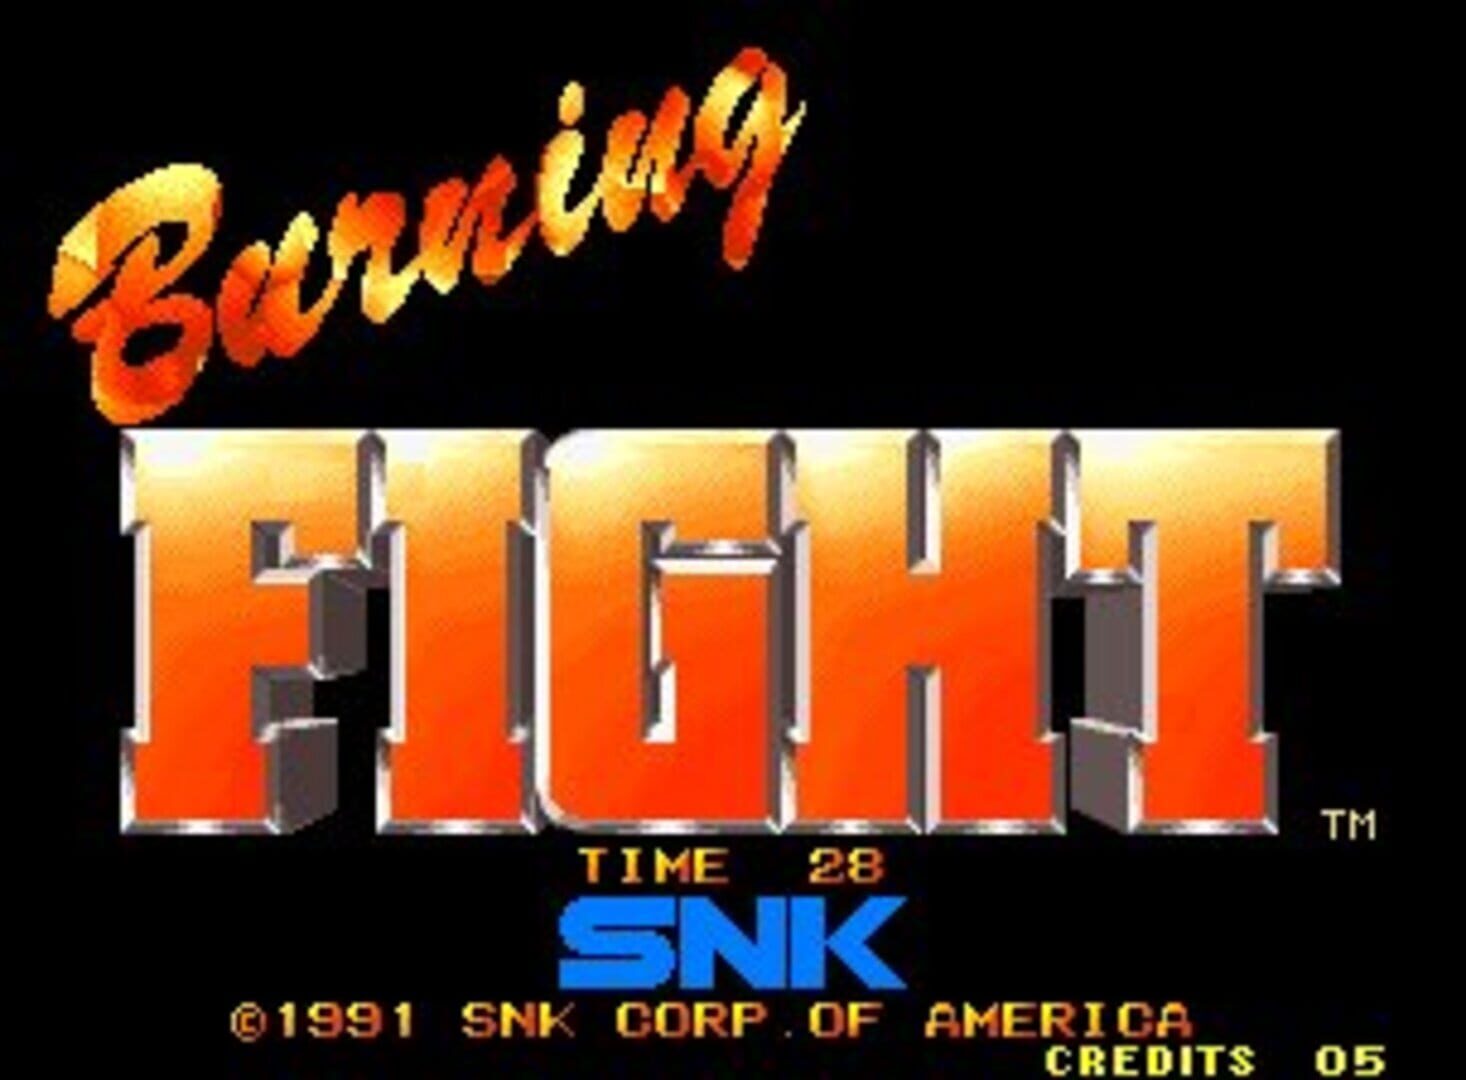 Burning Fight screenshot